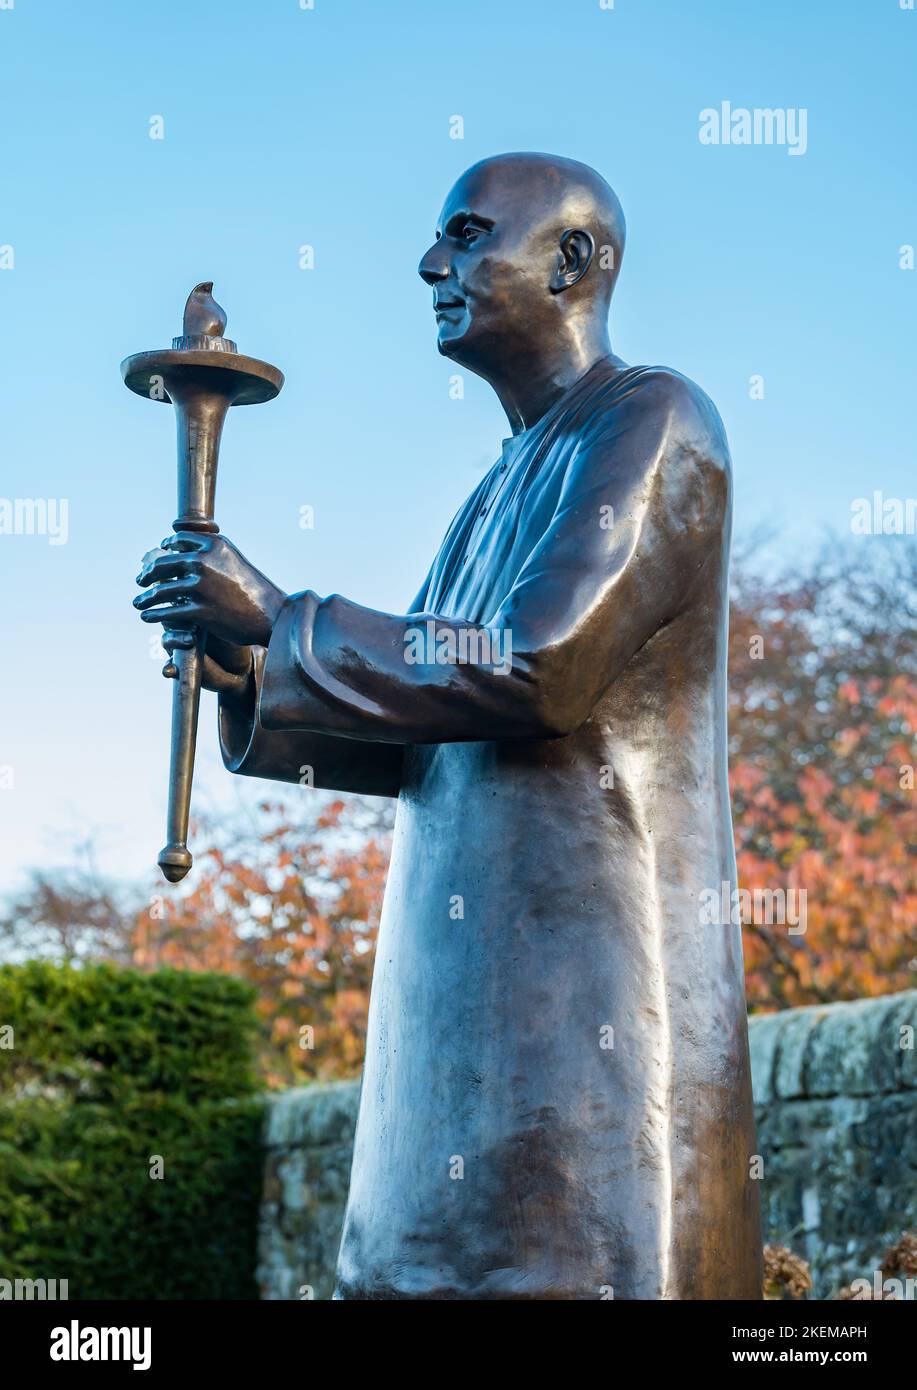 Sri Chimnoy sculpture called Dreamer of Peace by Kaivalya Tropy in Saughton Park, Edinburgh, Scotland, UK Stock Photo